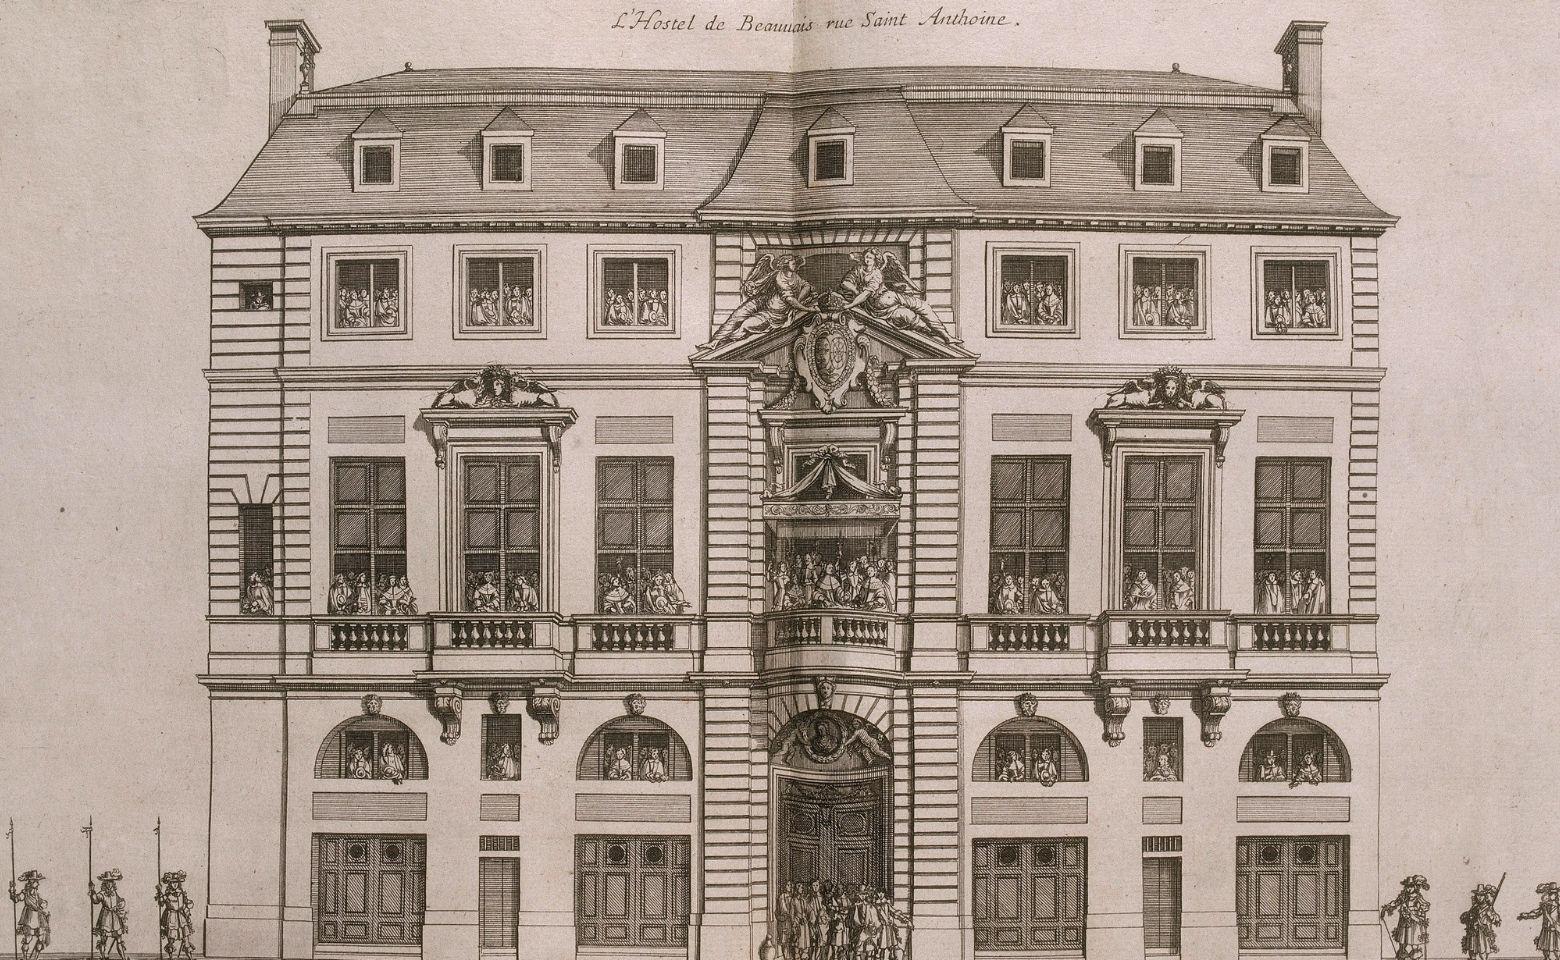 Façade de l'Hôtel de Beauvais - Jean Marot